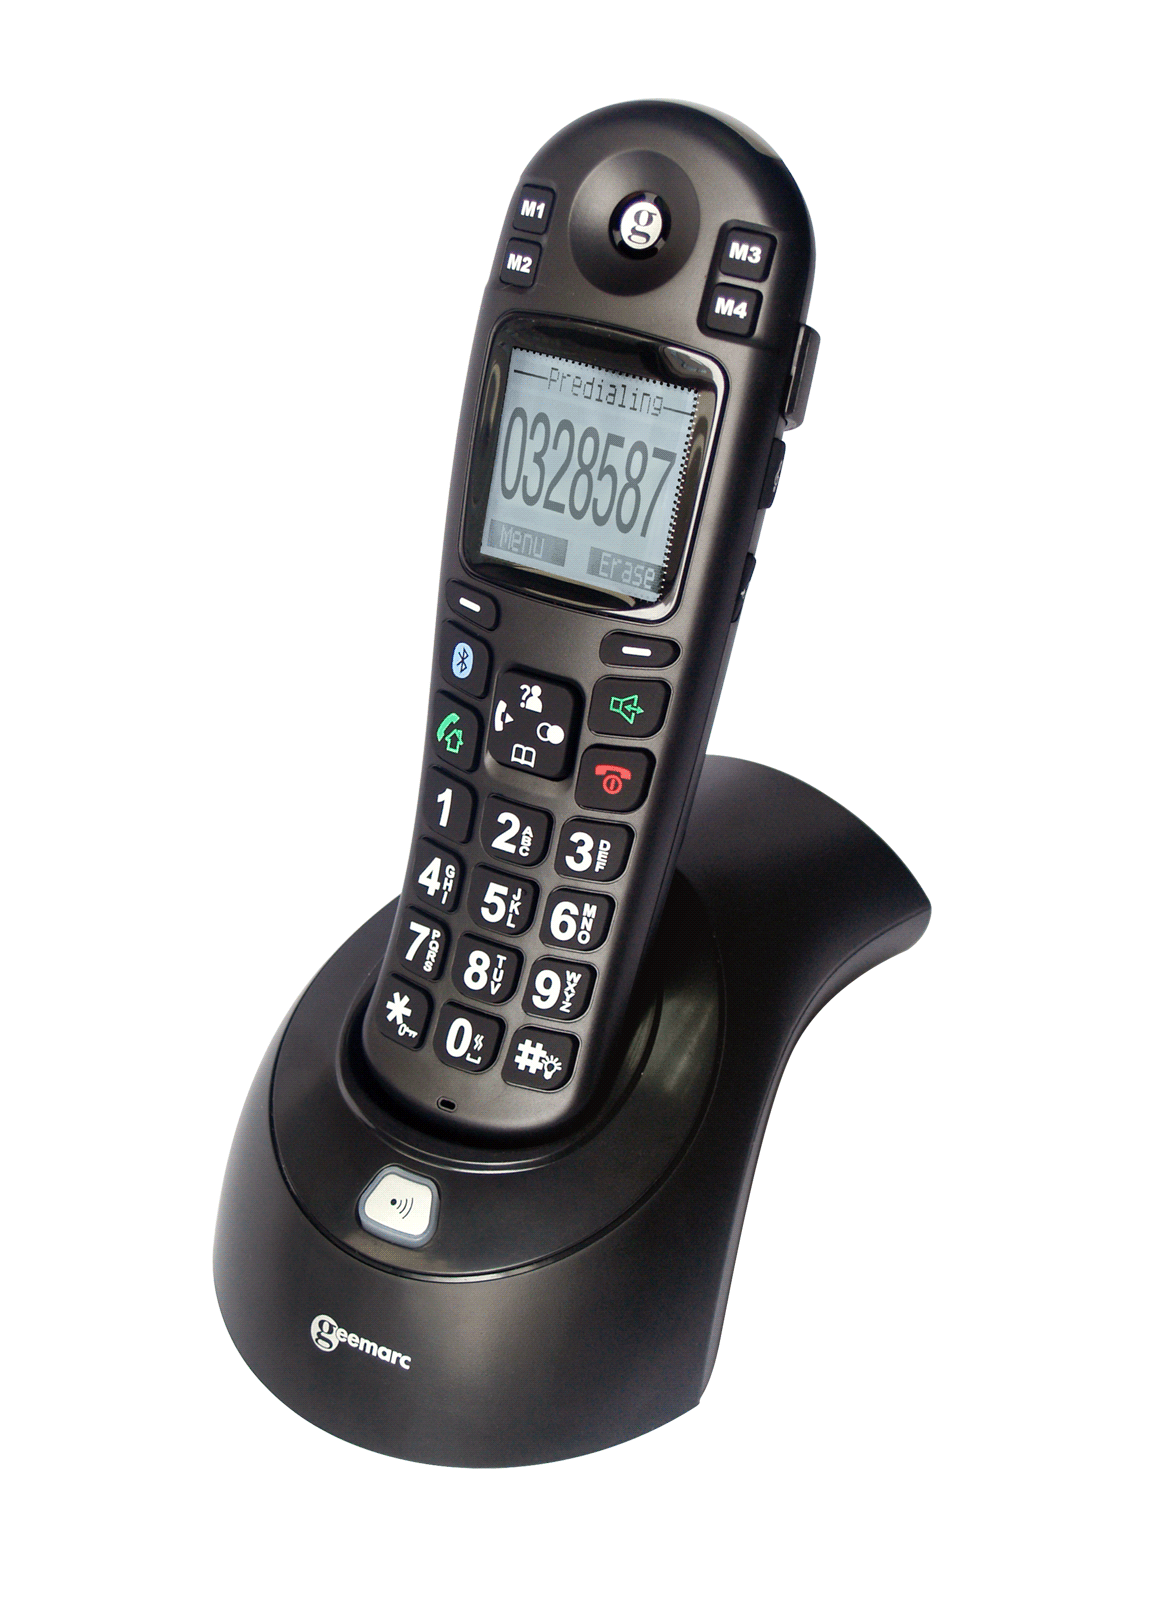 Téléphone fixe sans fil Geemarc base ou satellite GAP